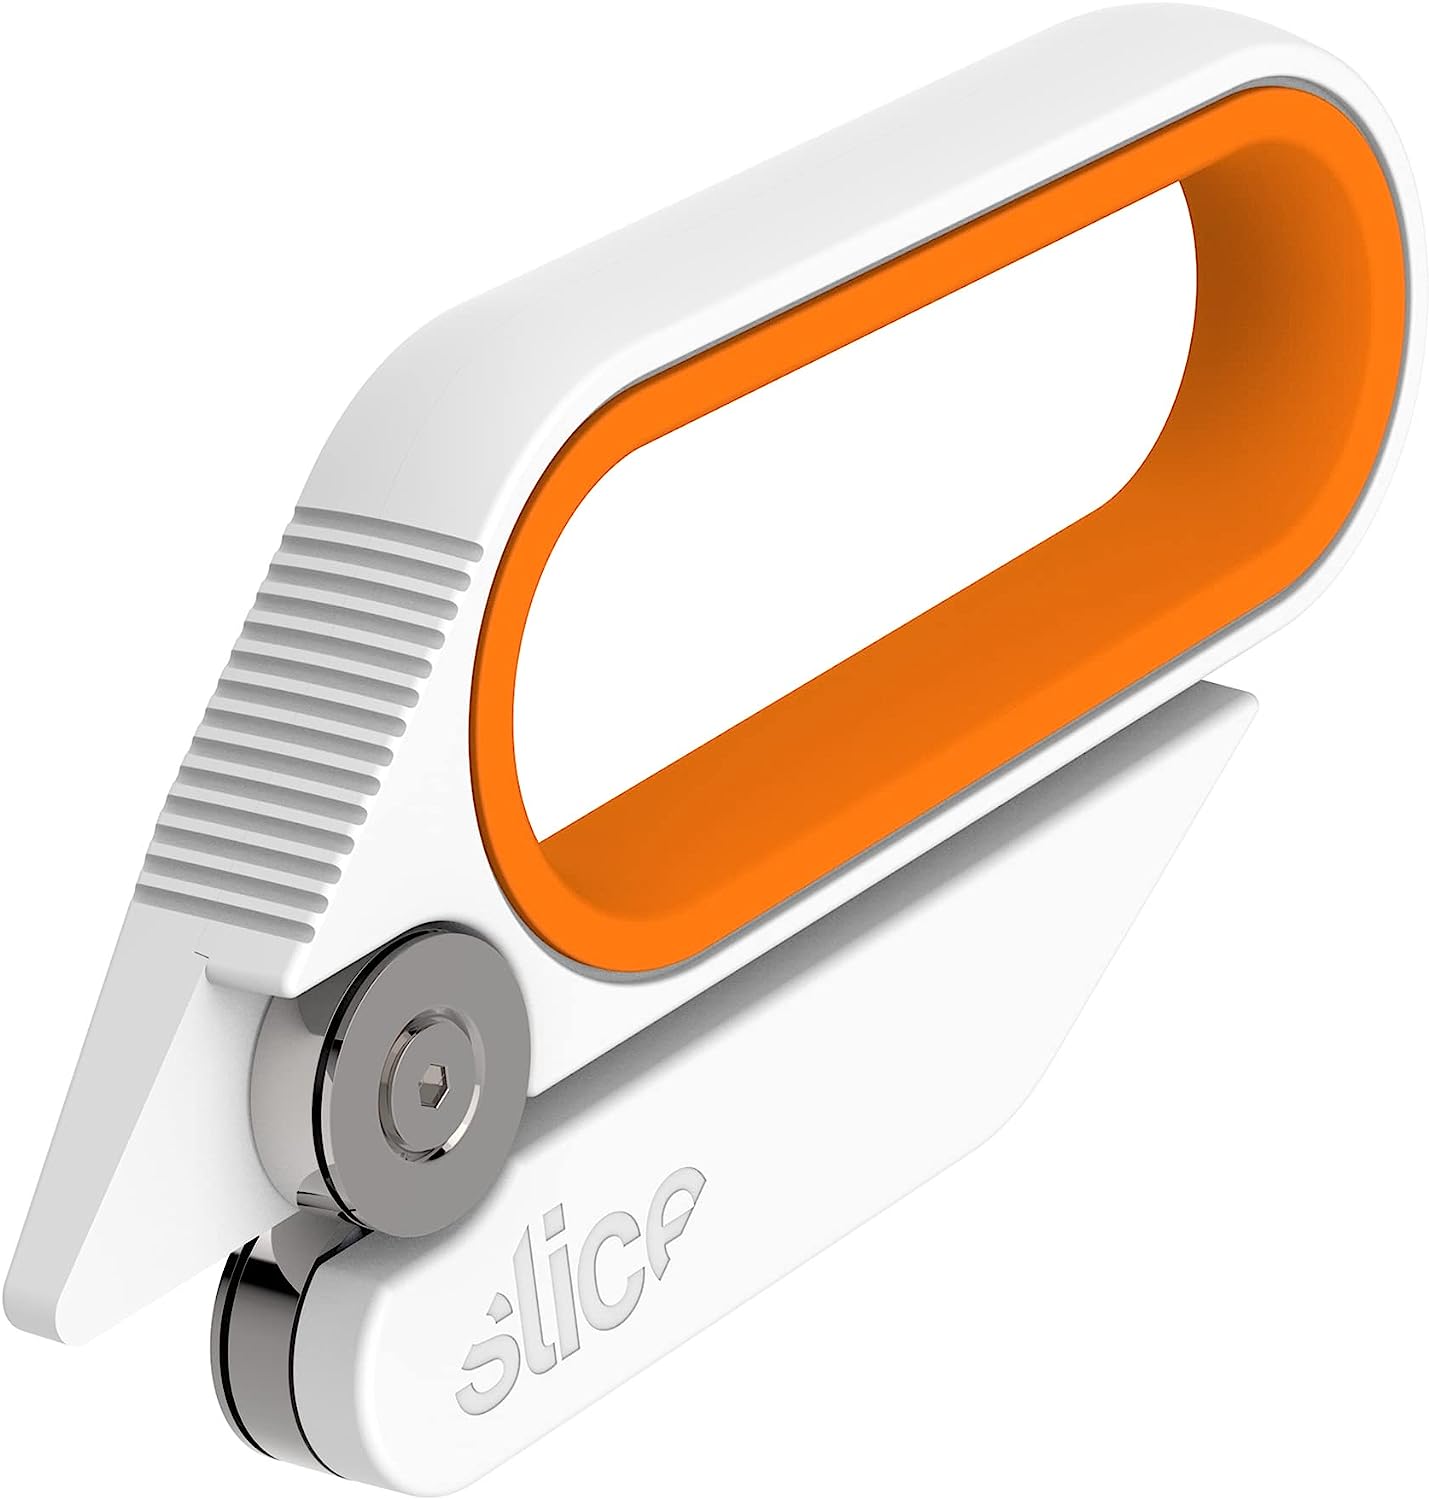 Slice 10598 Rotary Scissors Cutting Tool by Slice, [...]